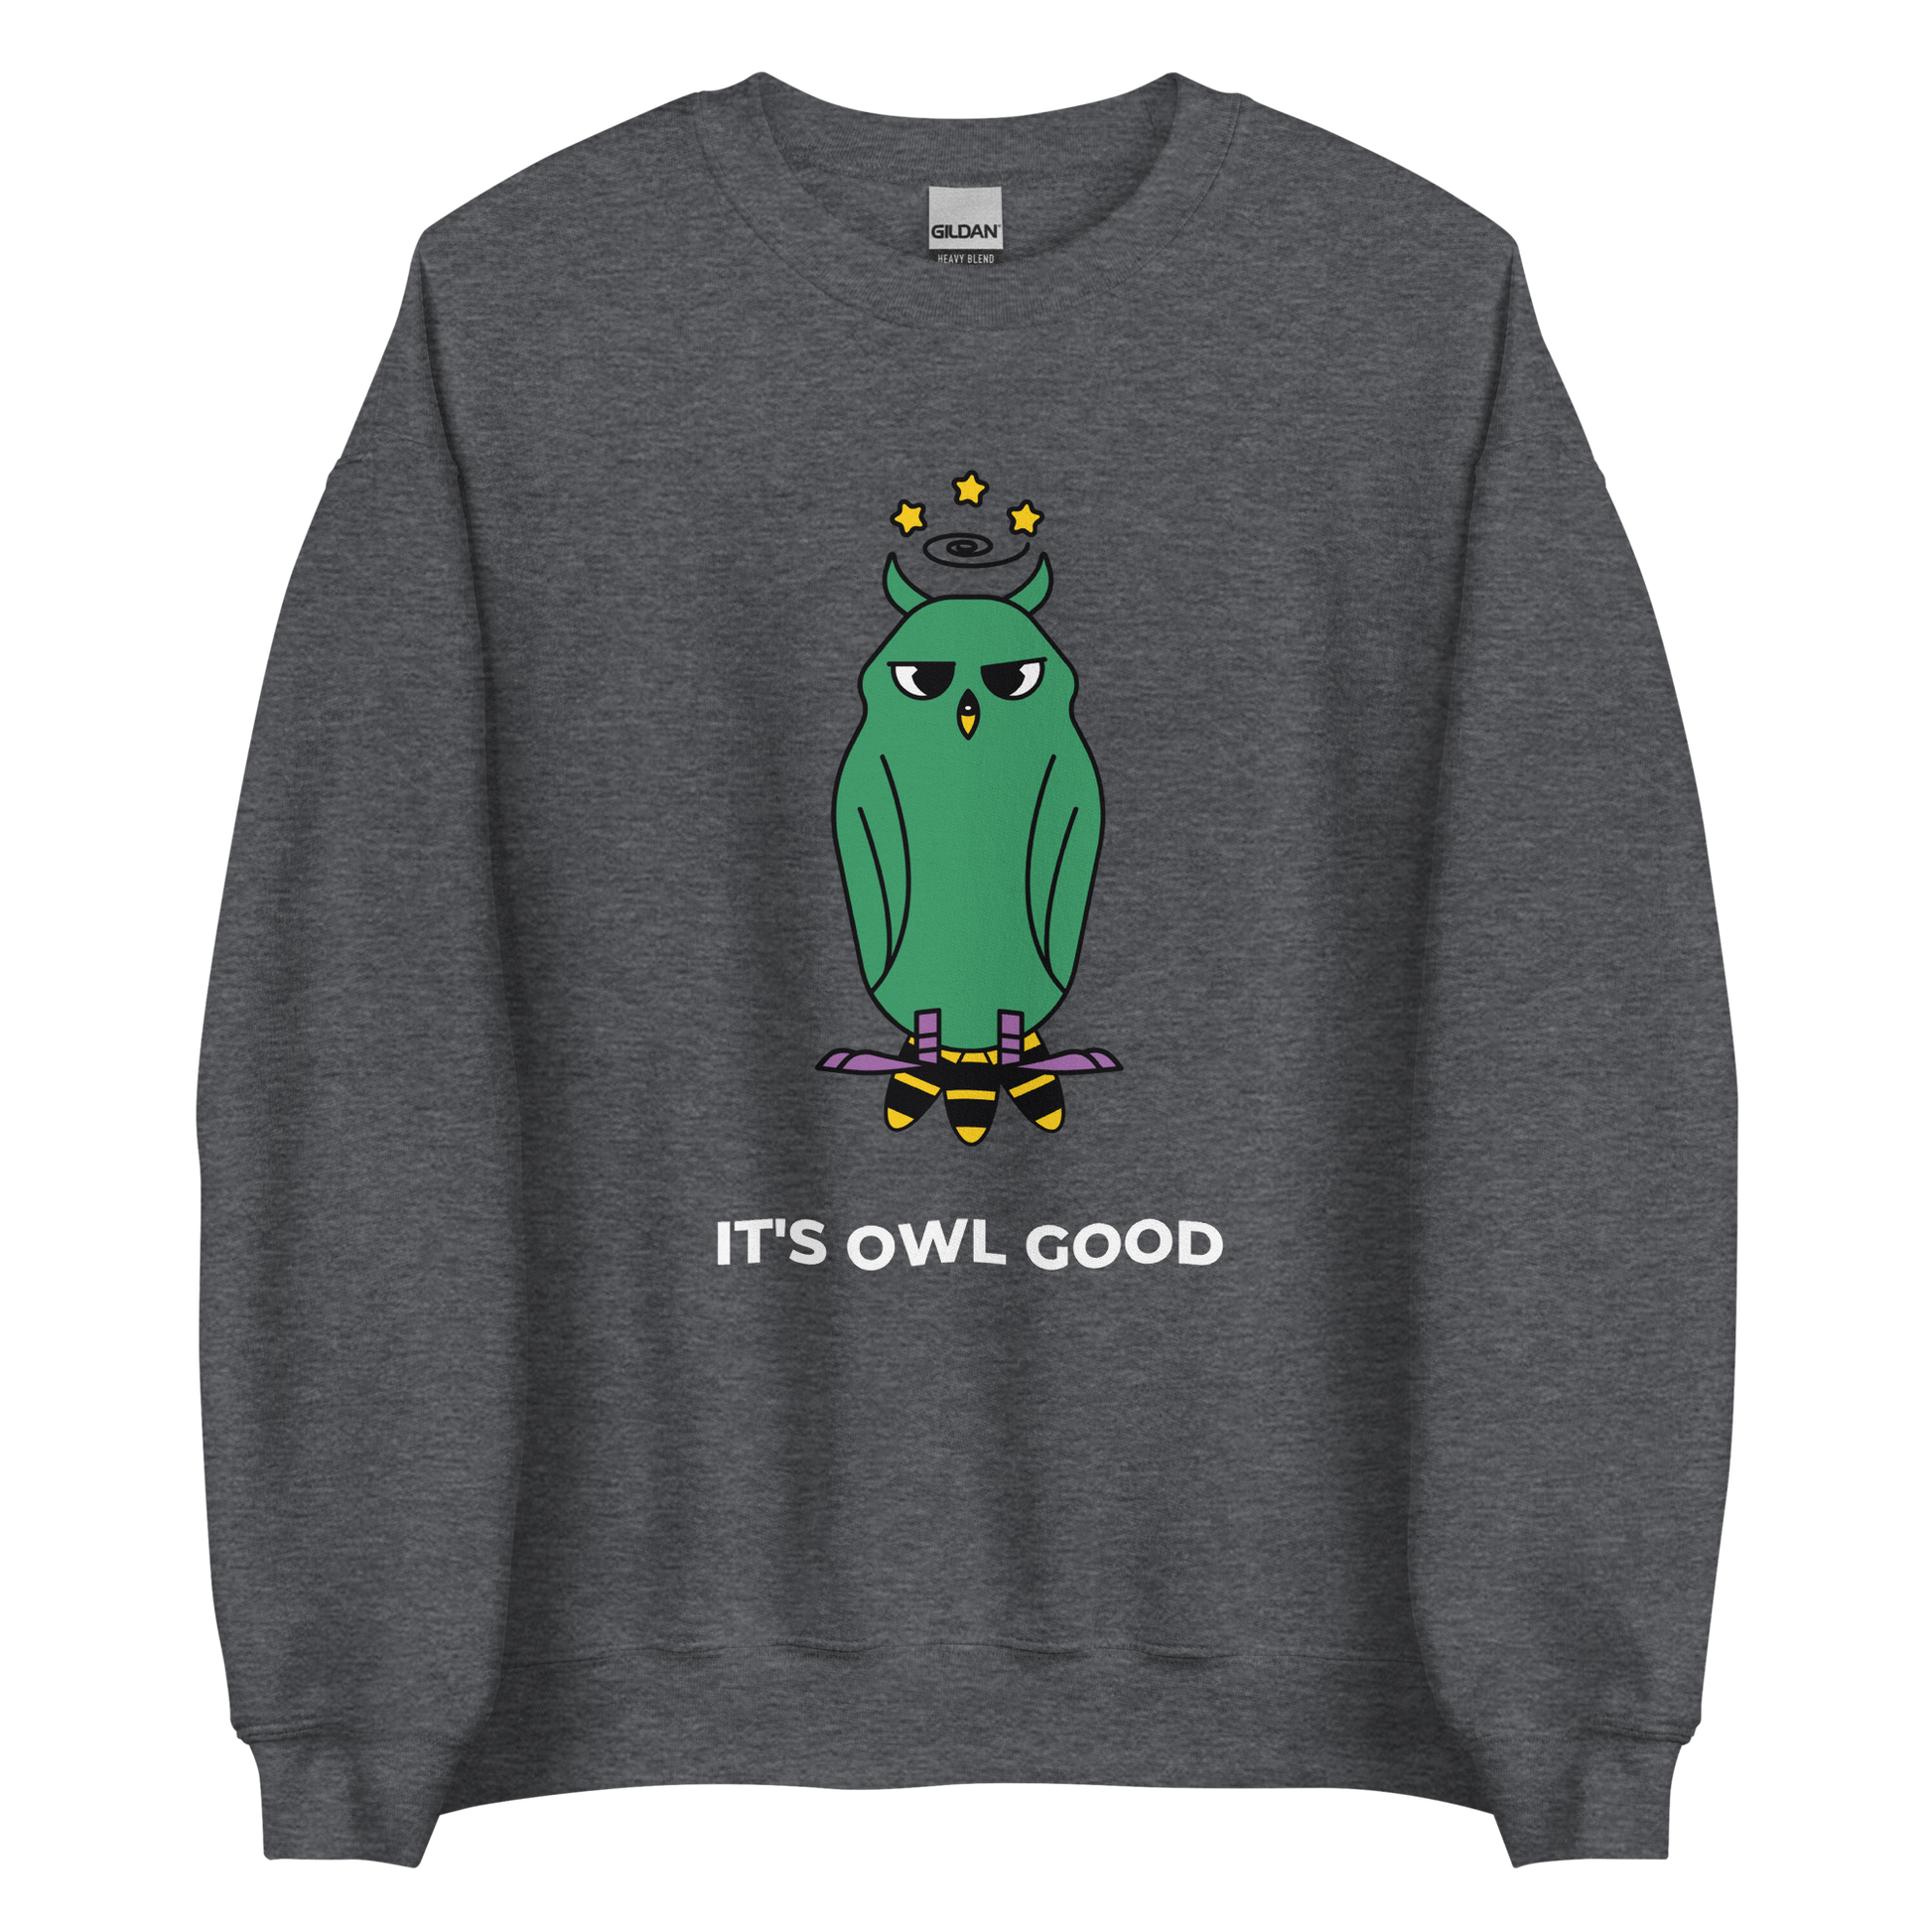 Dark Heather Owl Sweatshirt featuring a captivating It's Owl Good graphic on the chest - Funny Graphic Owl Sweatshirts - Boozy Fox